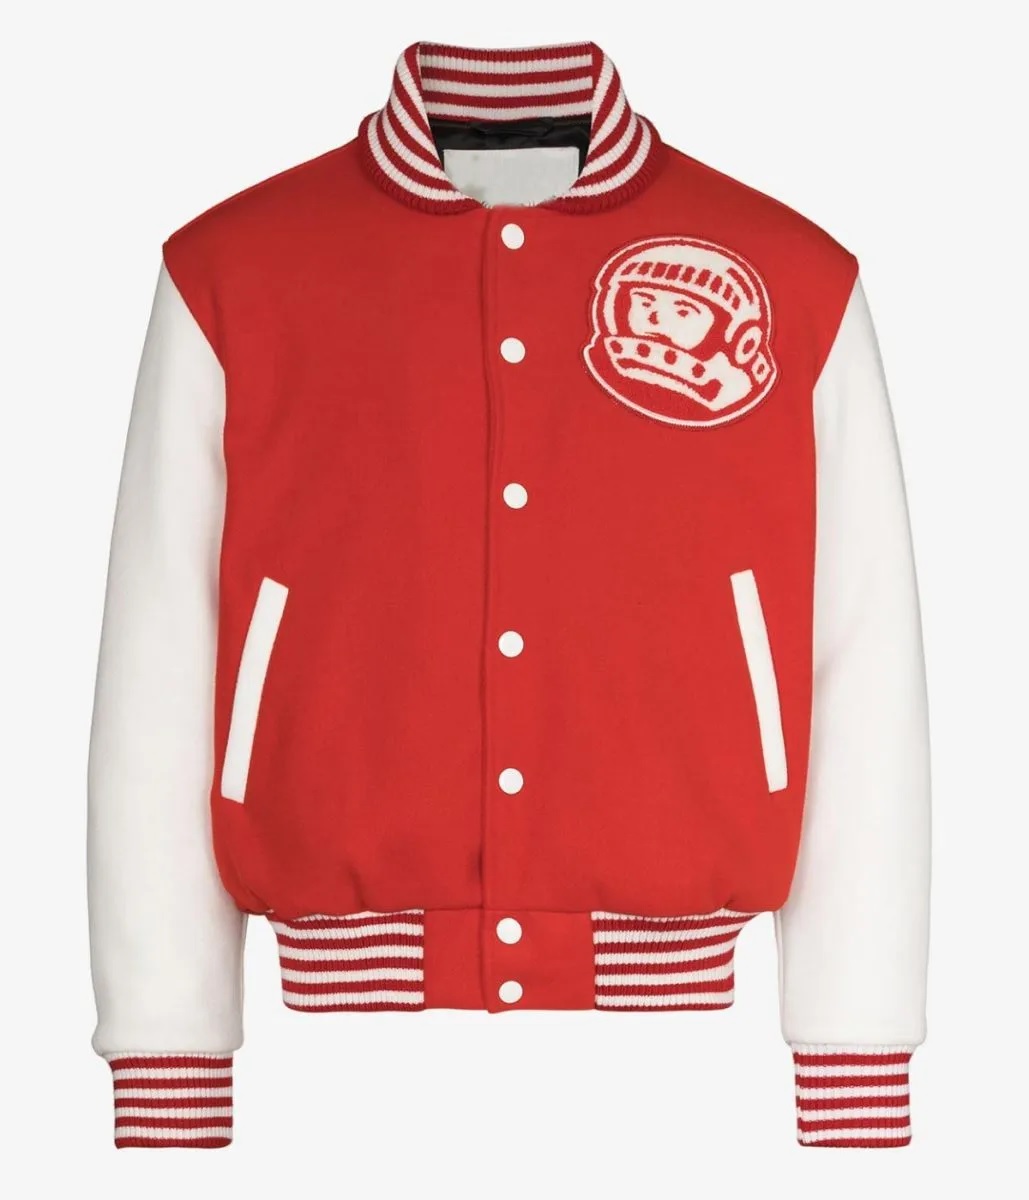 BBC Astro Varsity Red and White Jacket